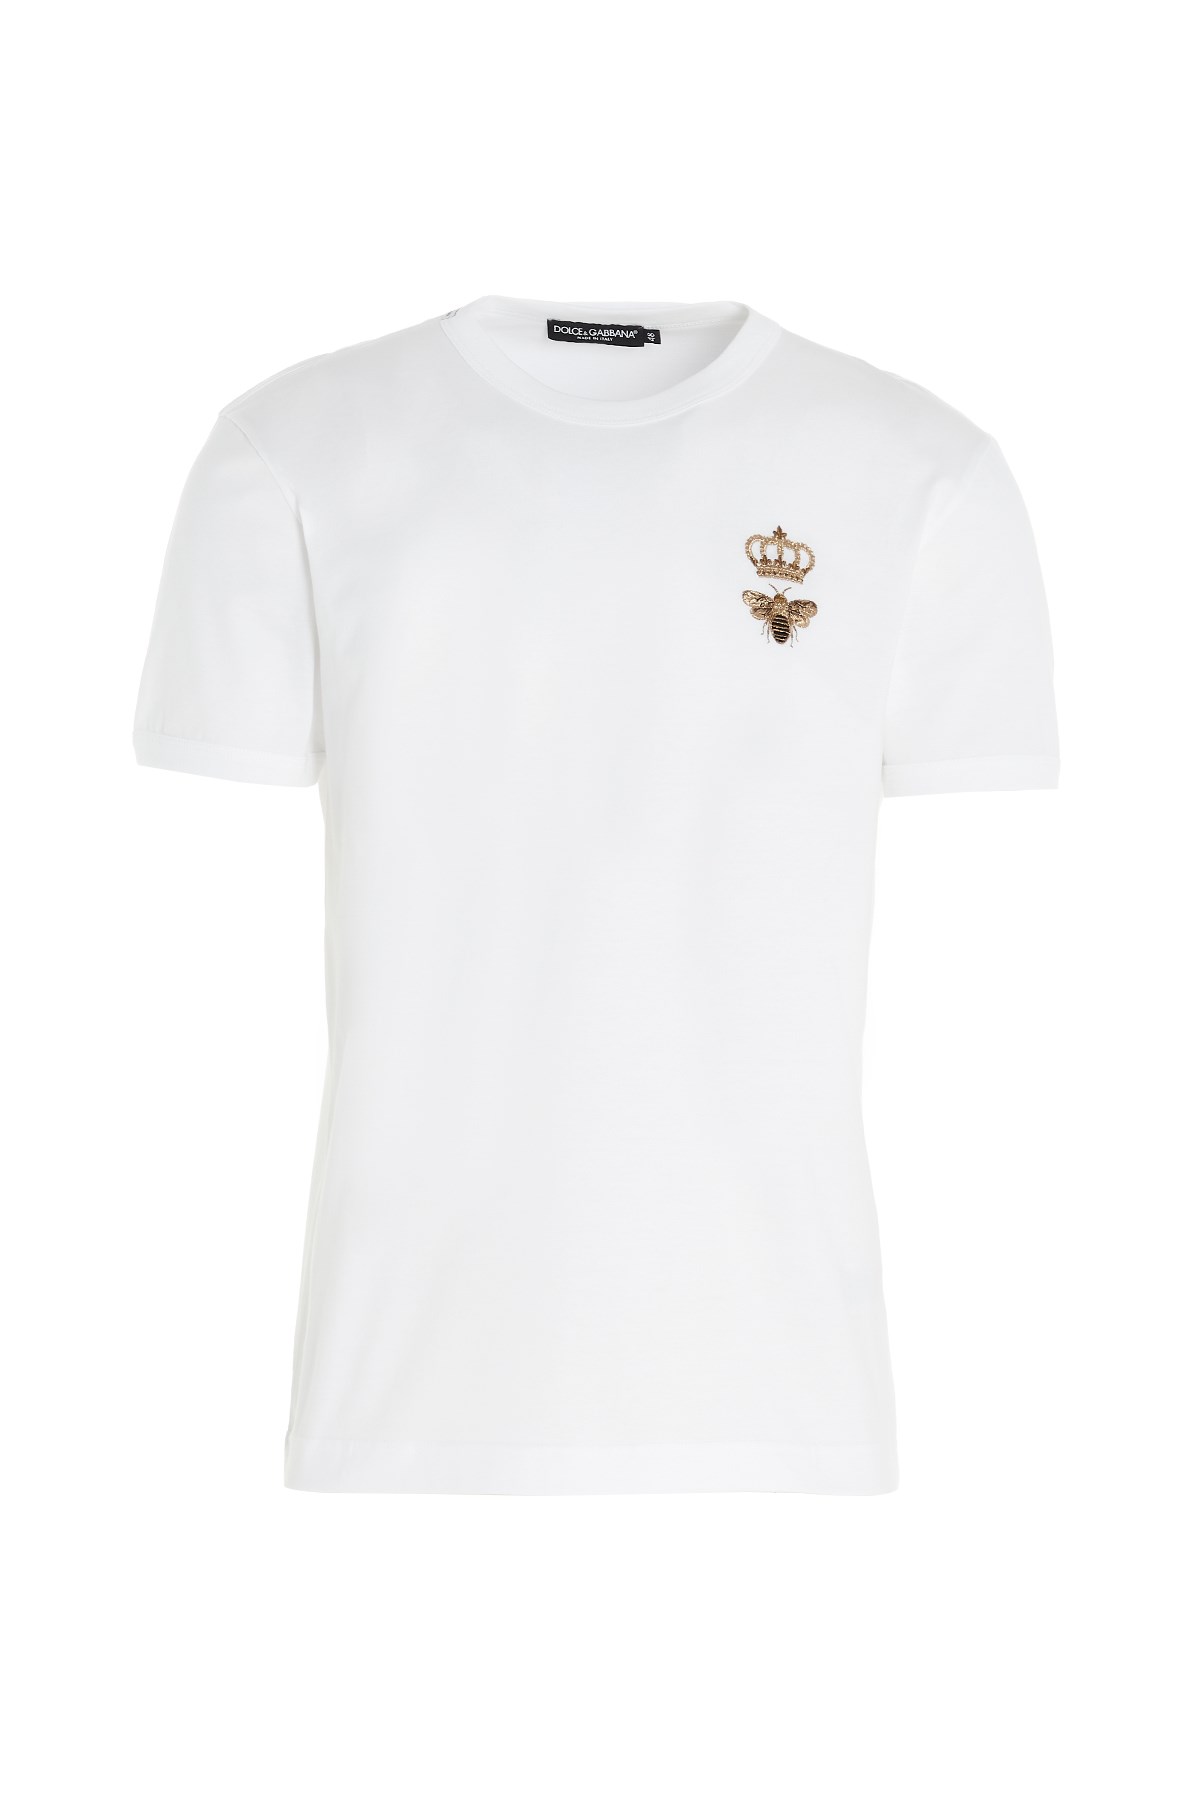 DOLCE & GABBANA 'Crown' Embroidered T-Shirt